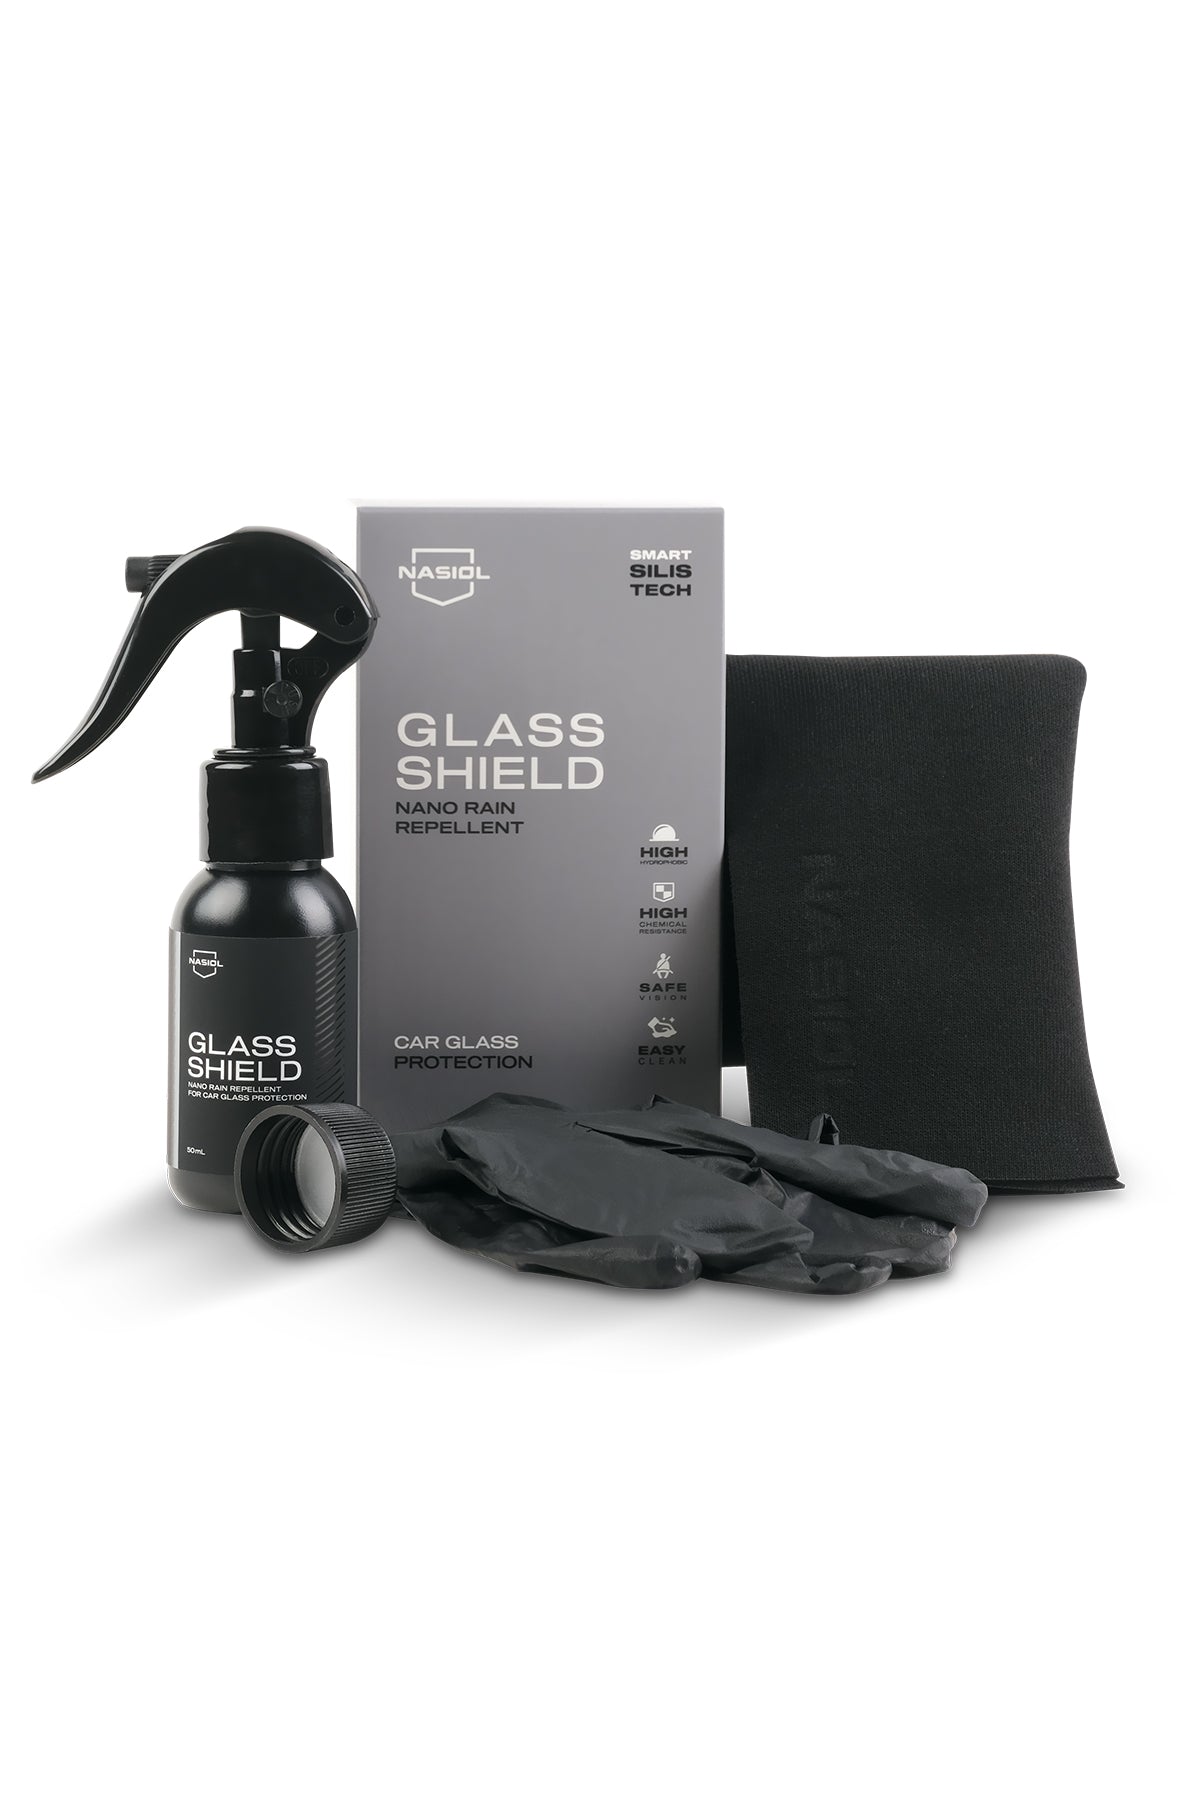 NANO Z COATING Nano Glass & Ceramics GL-01 Shower Glass Water Repellent  Door Windshield Water Repellent. Natural Coating UV Protection. Use